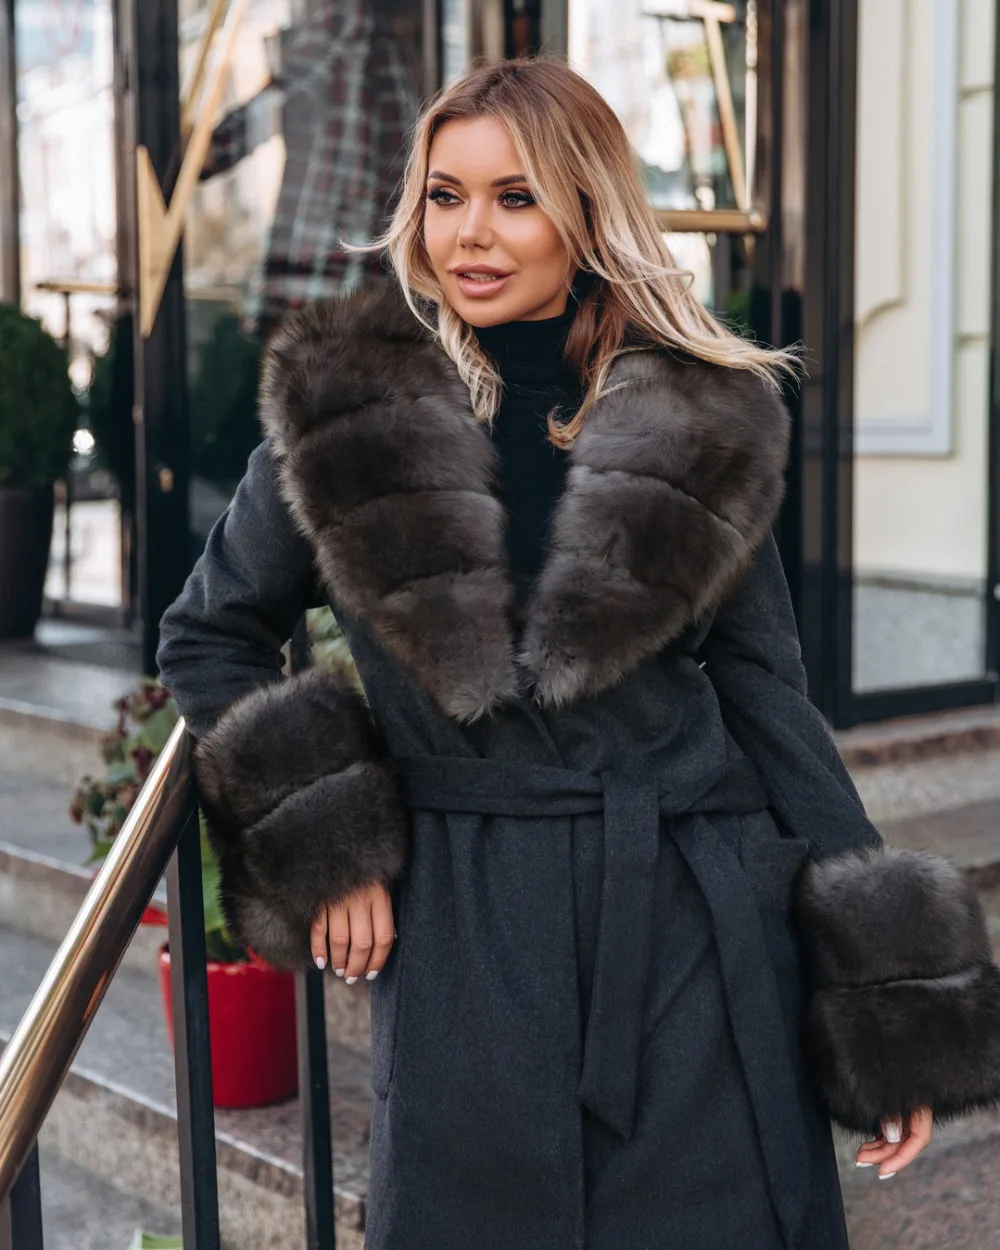 100cm Long Winter Fashion Real Fur Coats Women High Street Wool Blend With Natural Fox Fur Collar Warm Cashmere Fur Overcoats enlarge